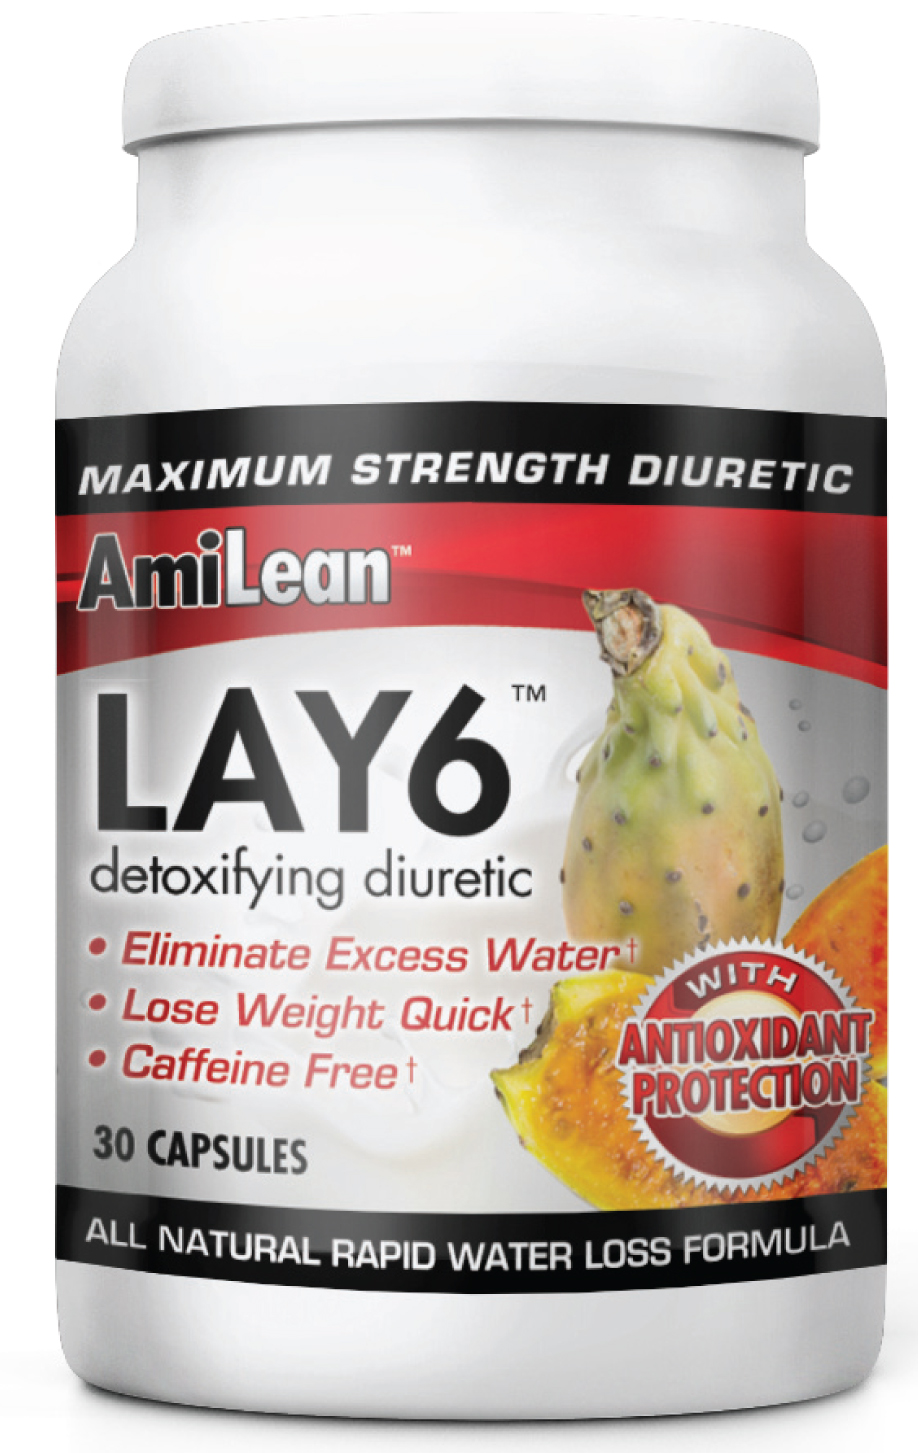 Lay6 diuretic by AmiLean